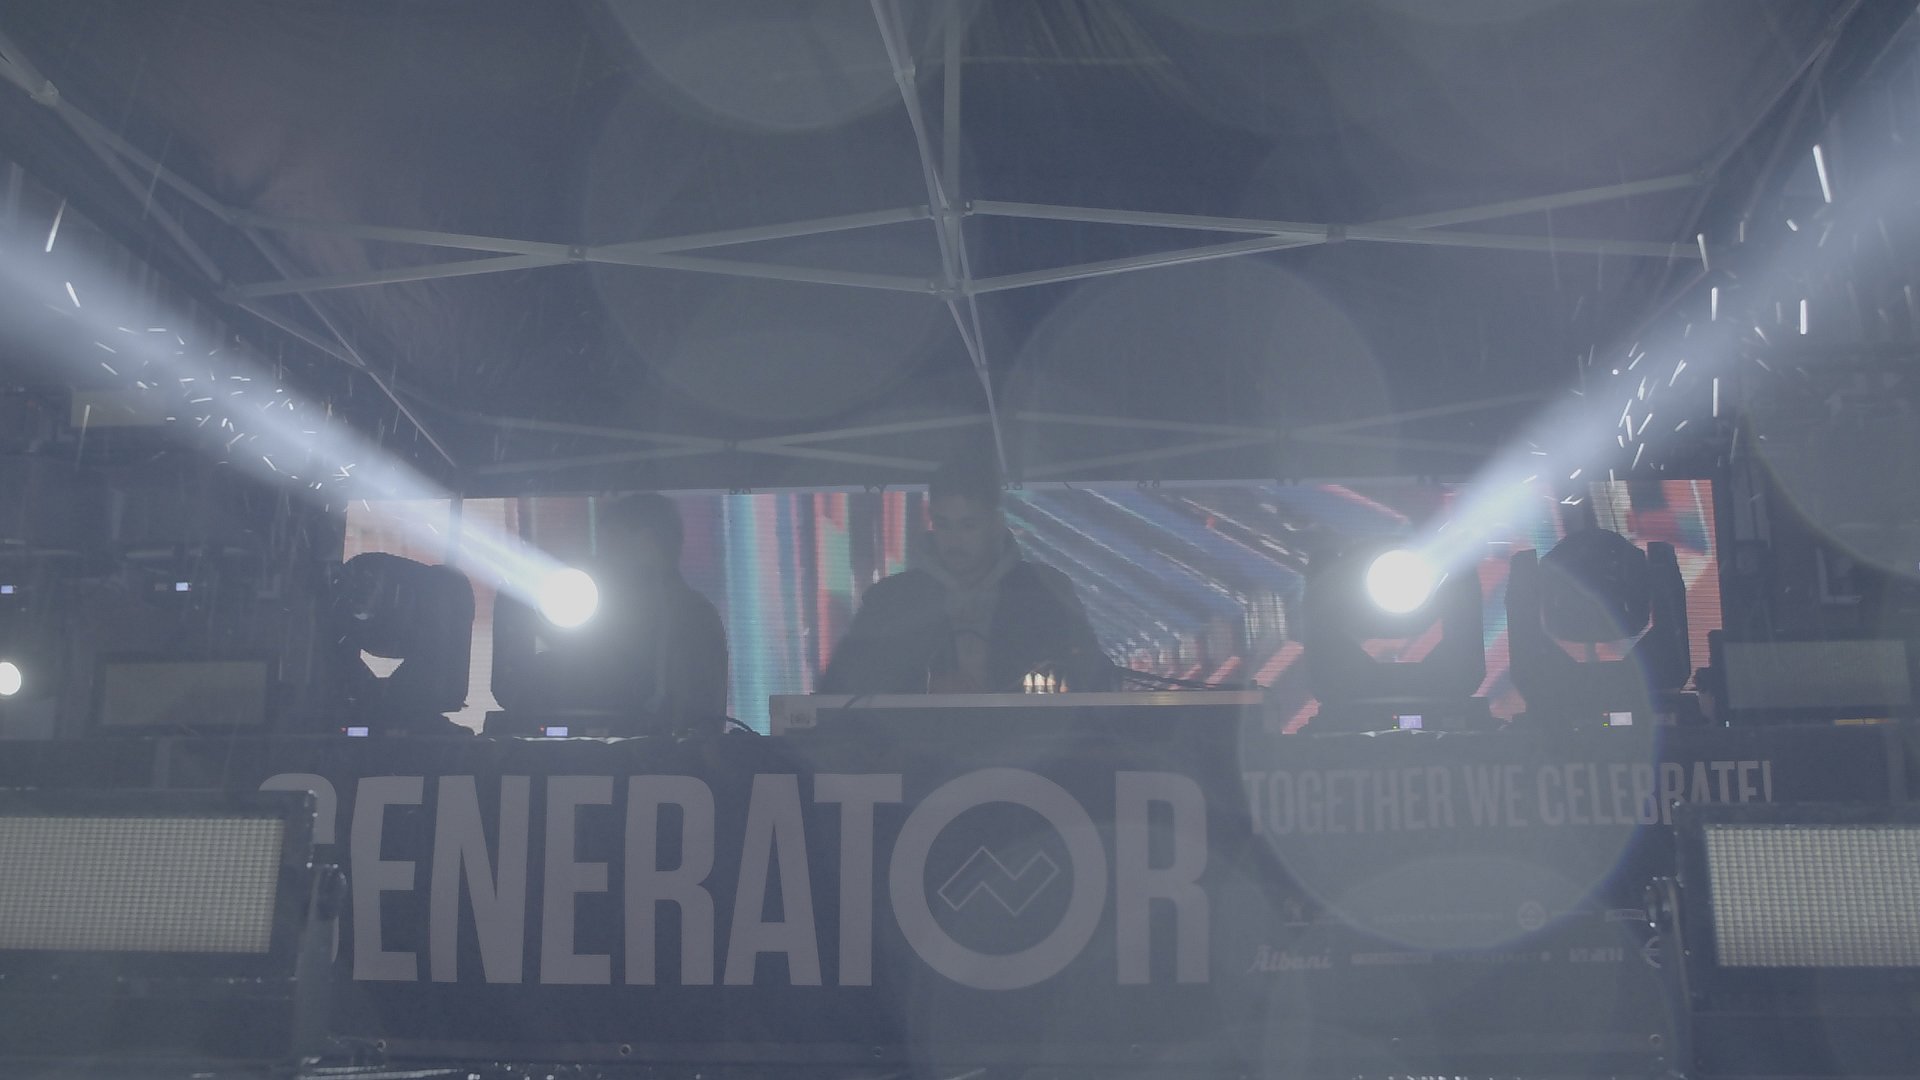 festival: Generator regner væk | TV2 Fyn